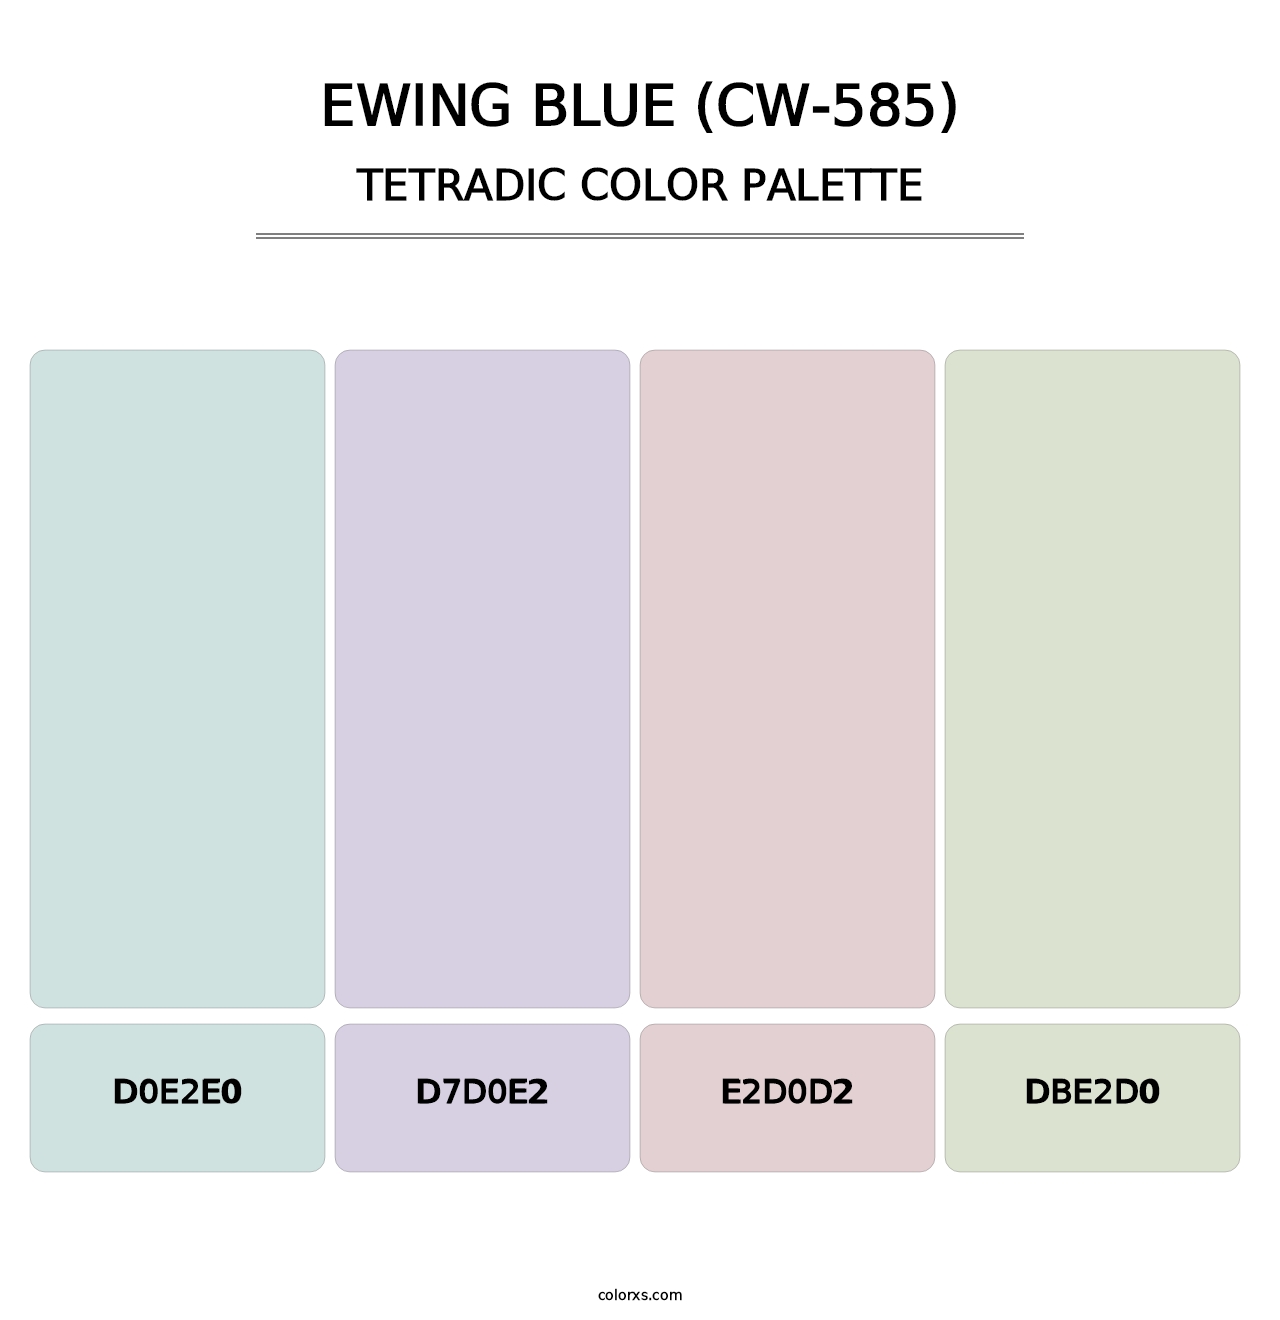 Ewing Blue (CW-585) - Tetradic Color Palette